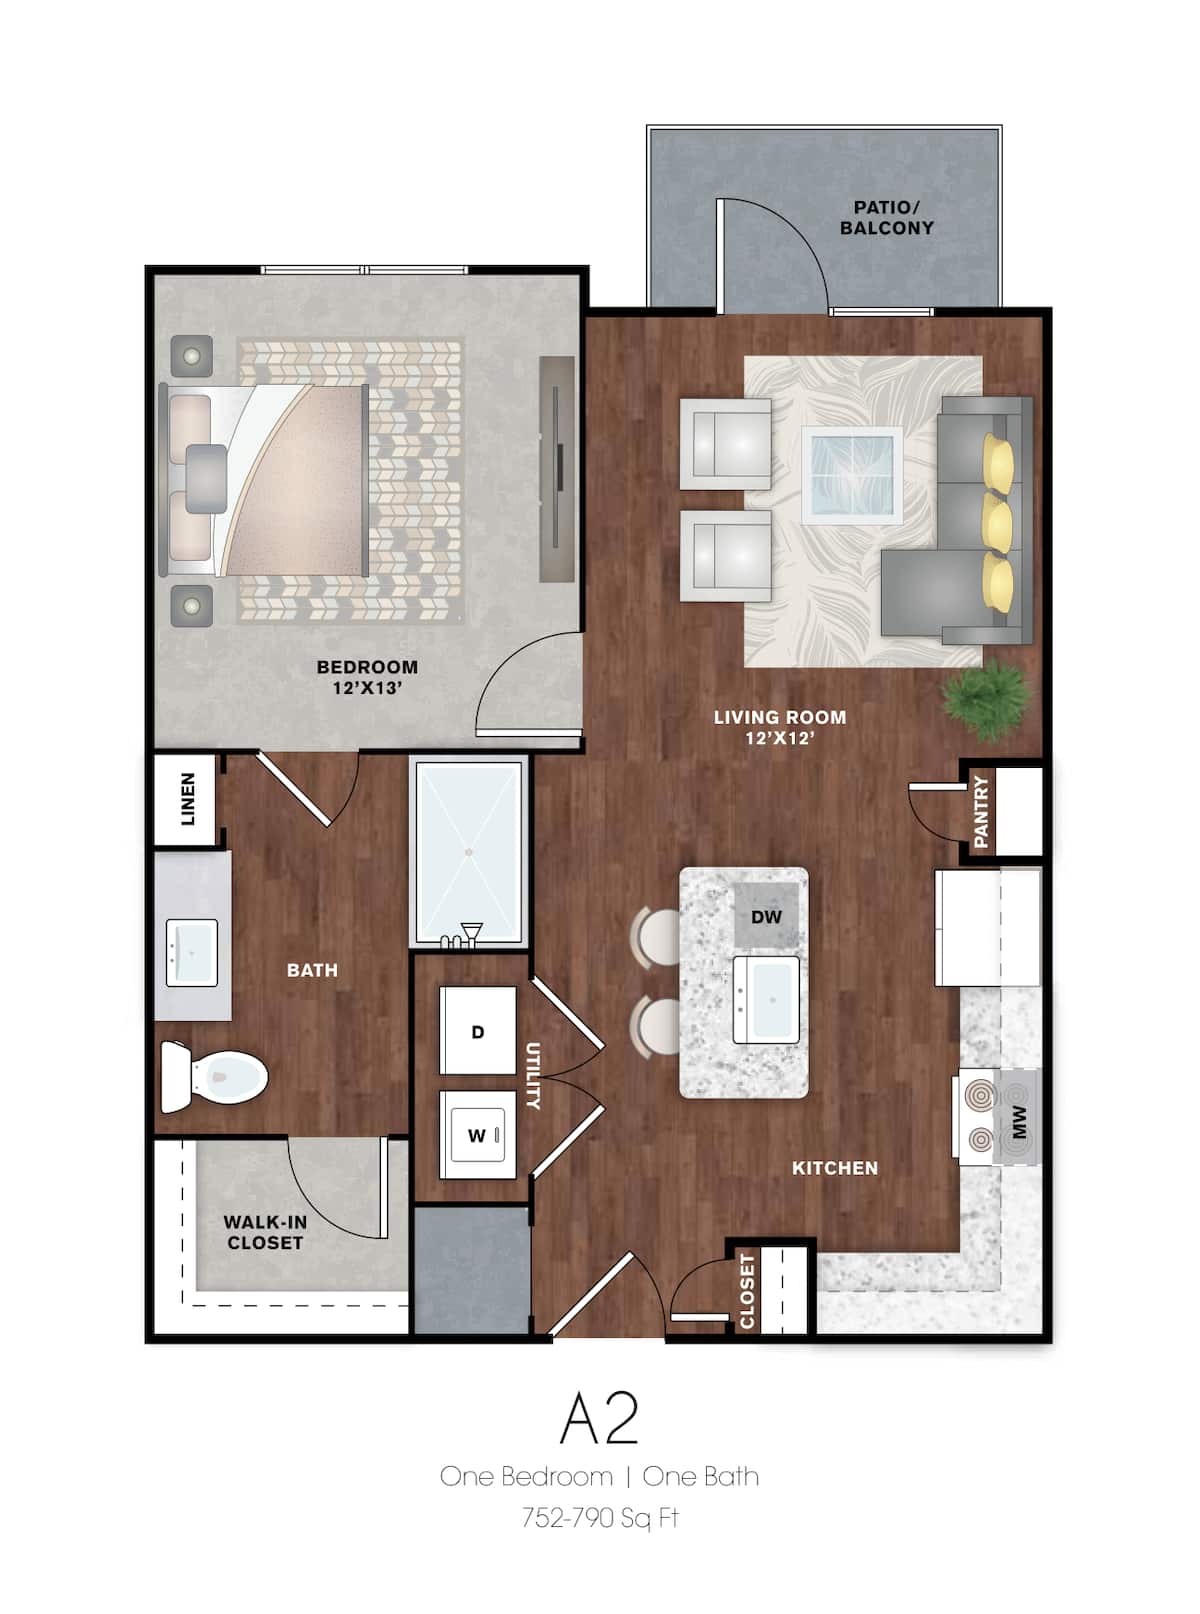 Floorplan diagram for A11, showing 1 bedroom